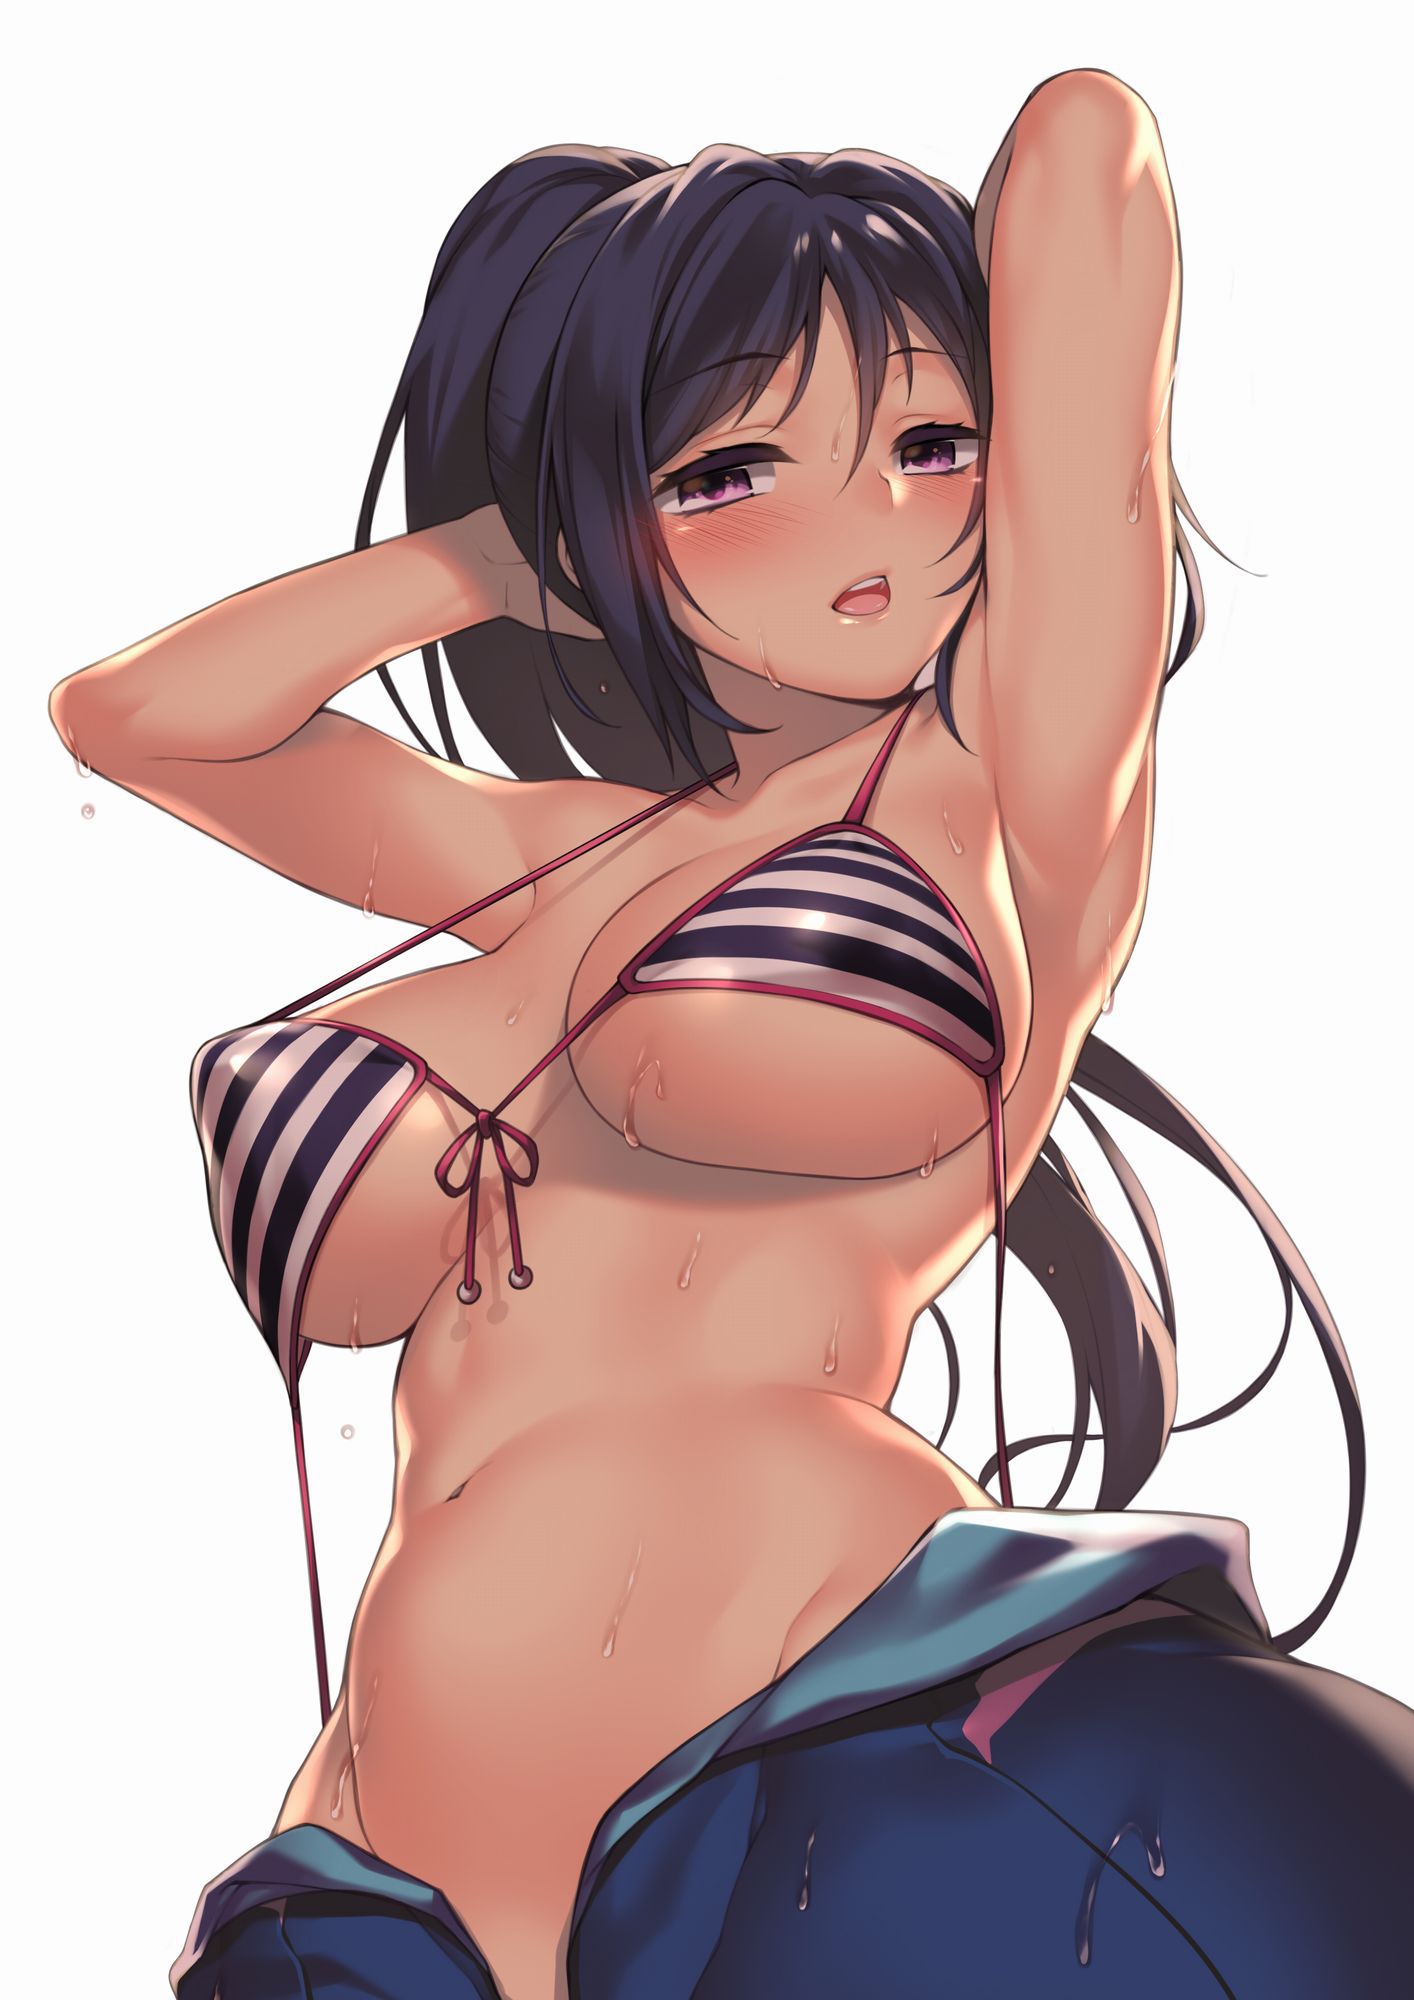 [Secondary/ZIP] Beautiful girl image summary of bikini top rather than bra 11